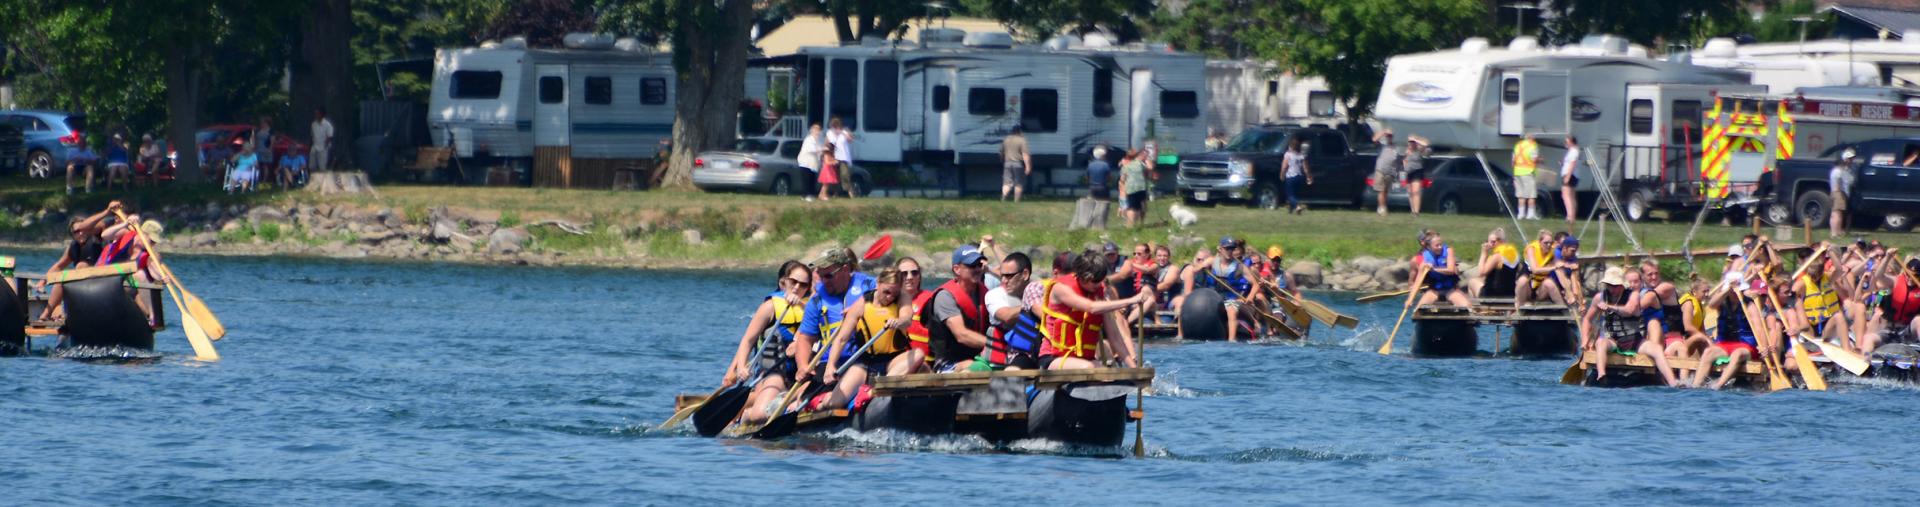 Tubie Festival river race